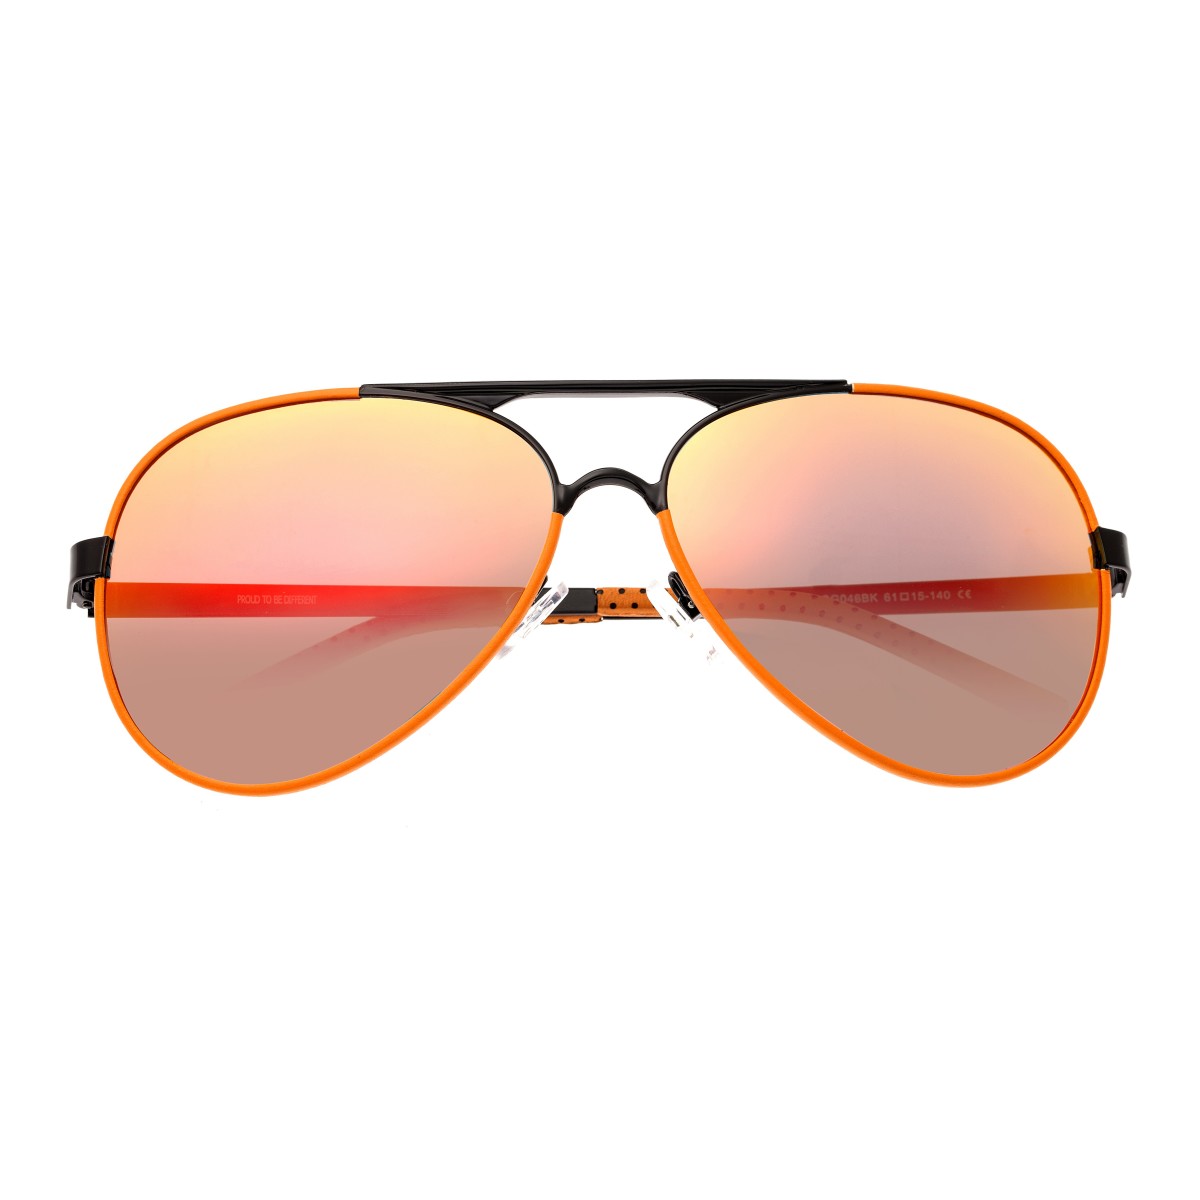 Breed Genesis Polarized Sunglasses - Black/Red-Yellow - BSG046BK